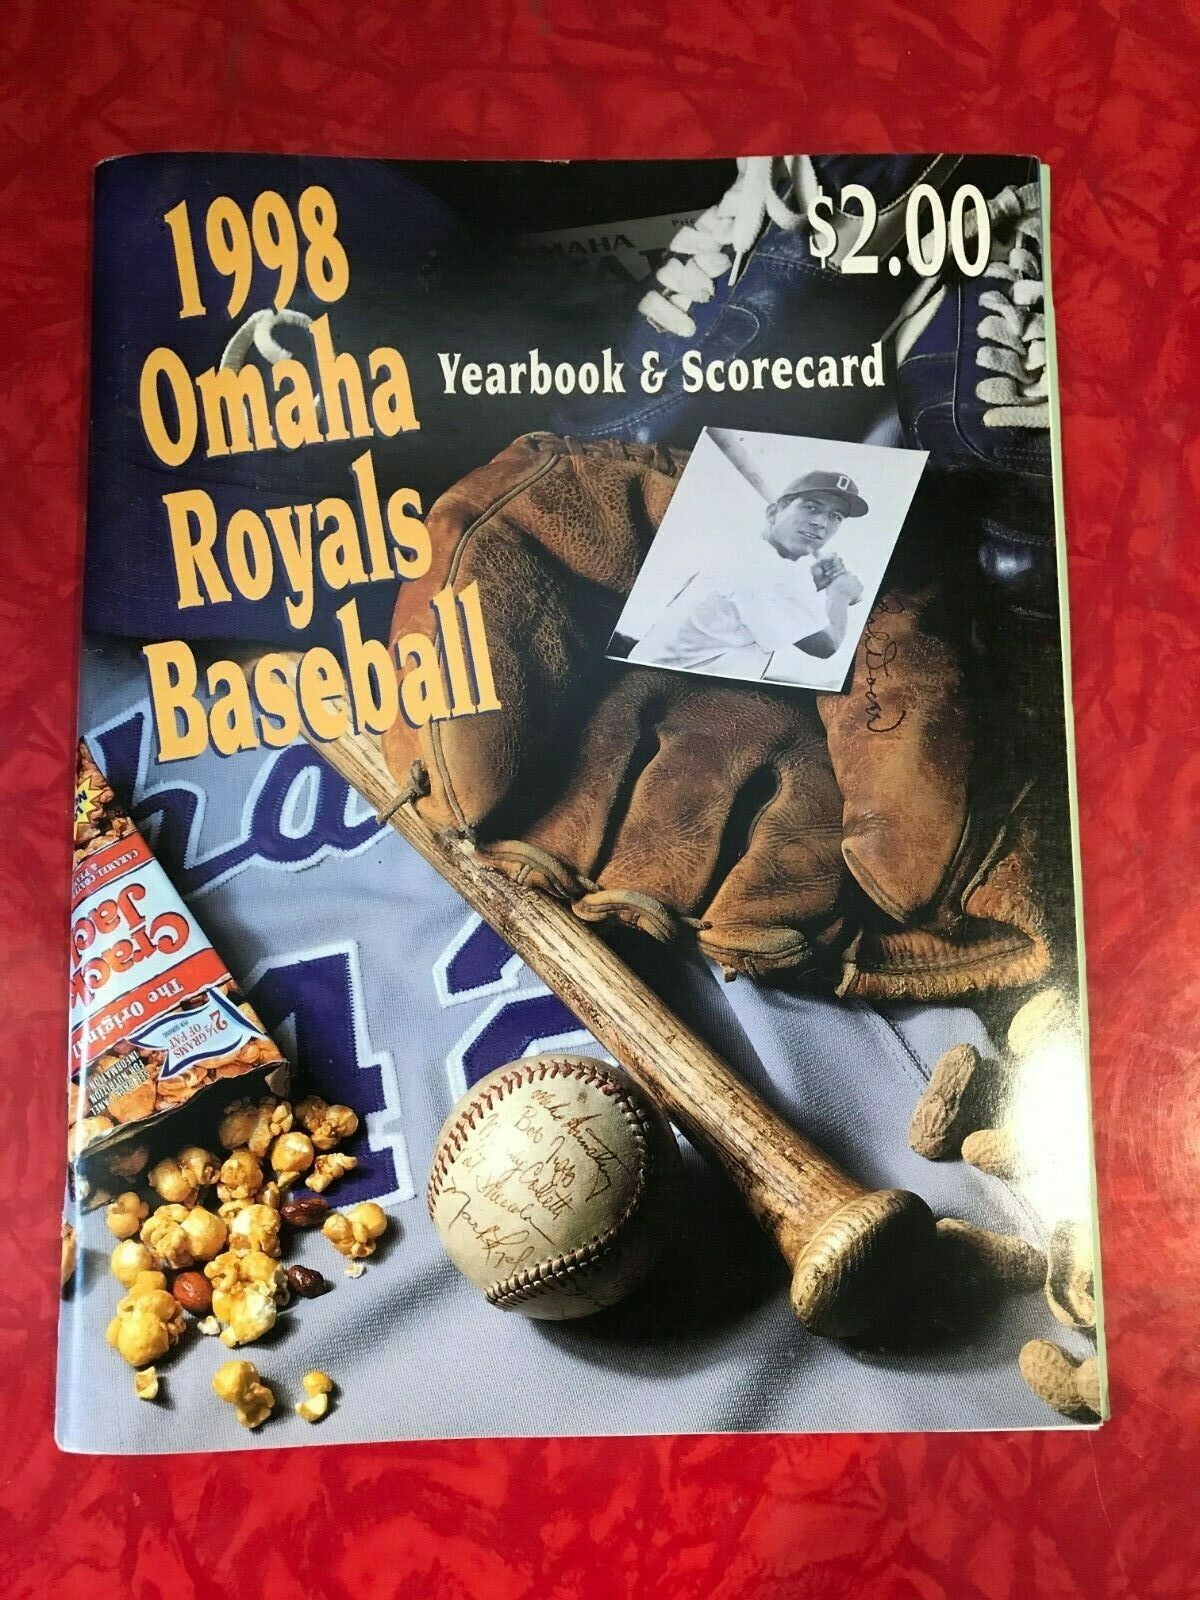 1998 OMAHA ROYALS BASEBALL YEARBOOK & SCORECARD PROGRAM + PHOTO INSERT